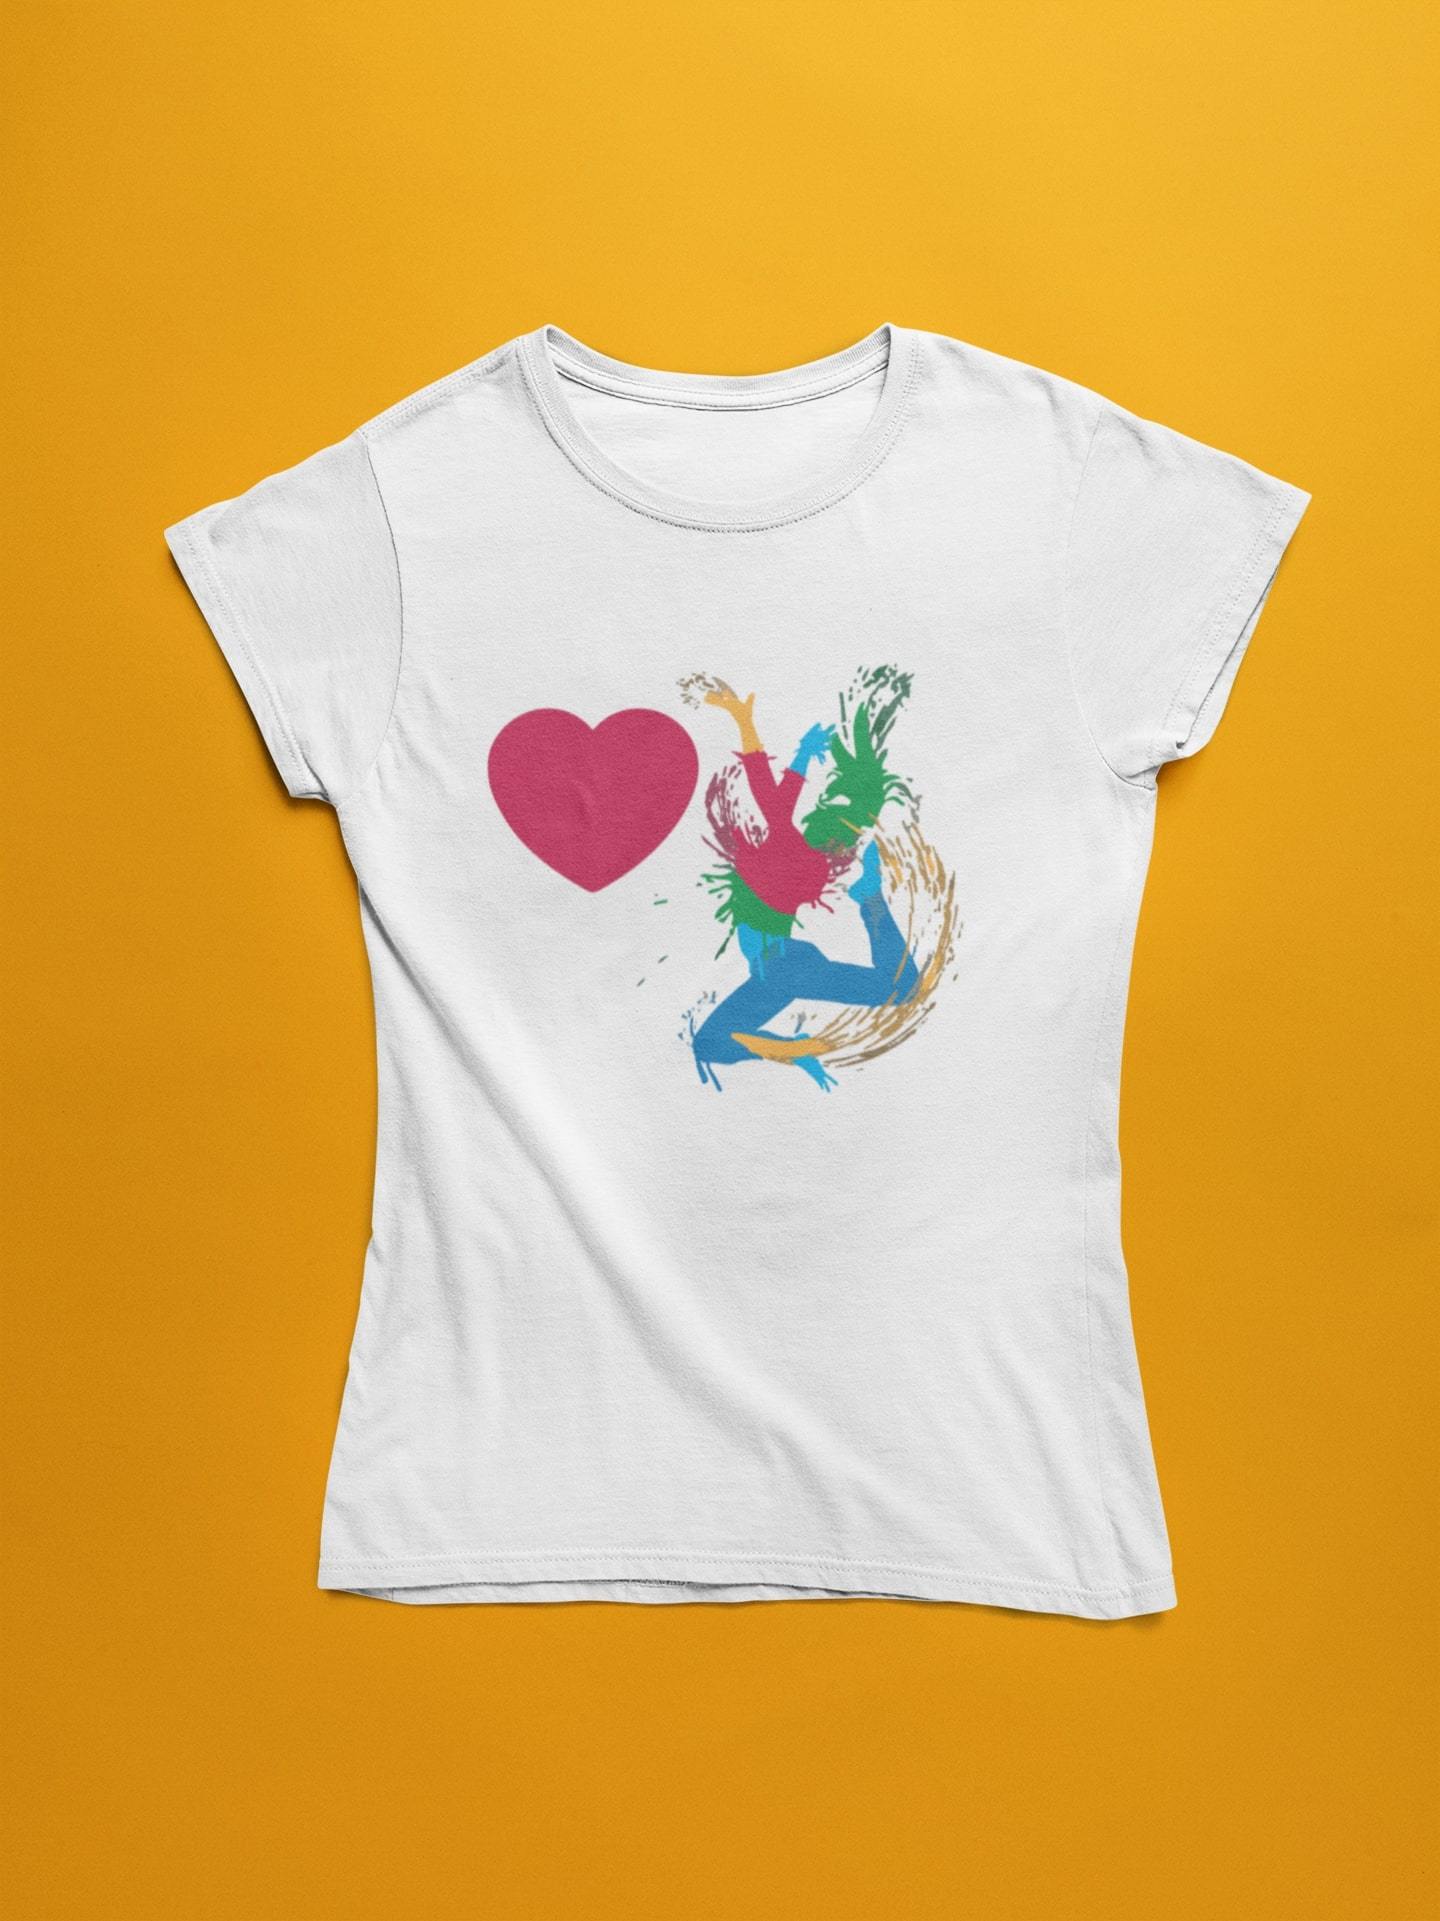 thelegalgang,Love Dance Graphic T shirt for Women,WOMEN.